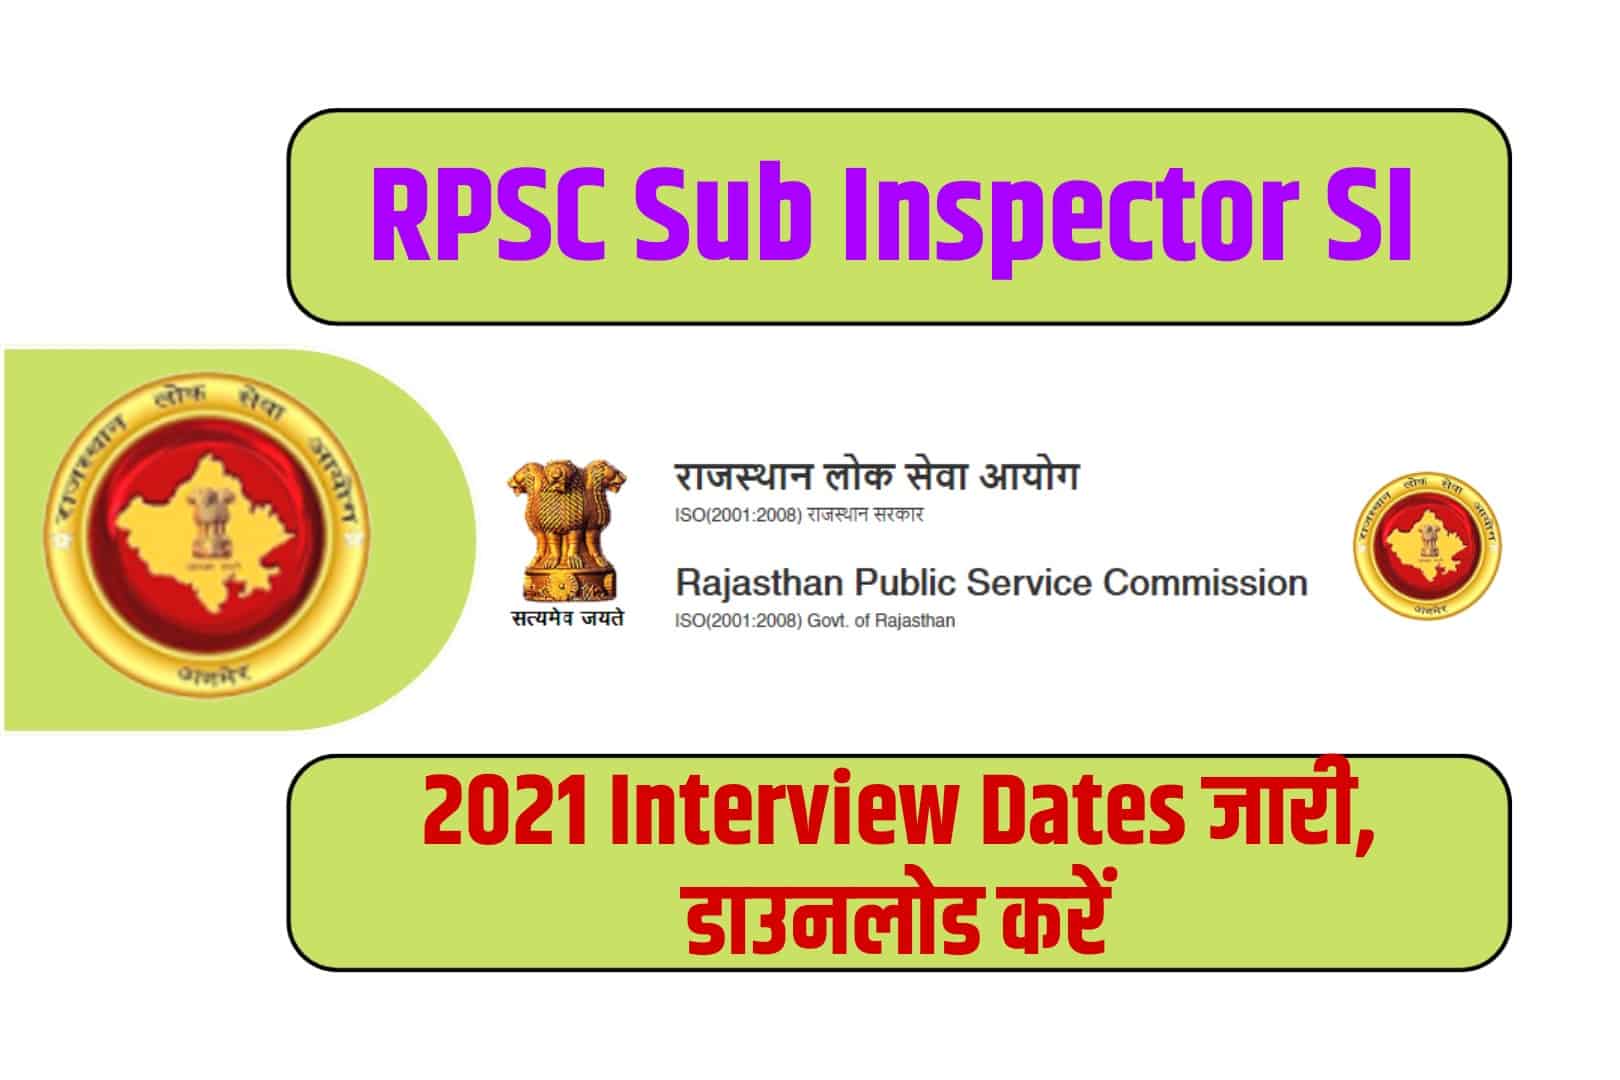 RPSC Sub Inspector SI 2021 Interview Dates | आरपीएससी सब इंस्पेक्टर इंटरव्यू तिथि